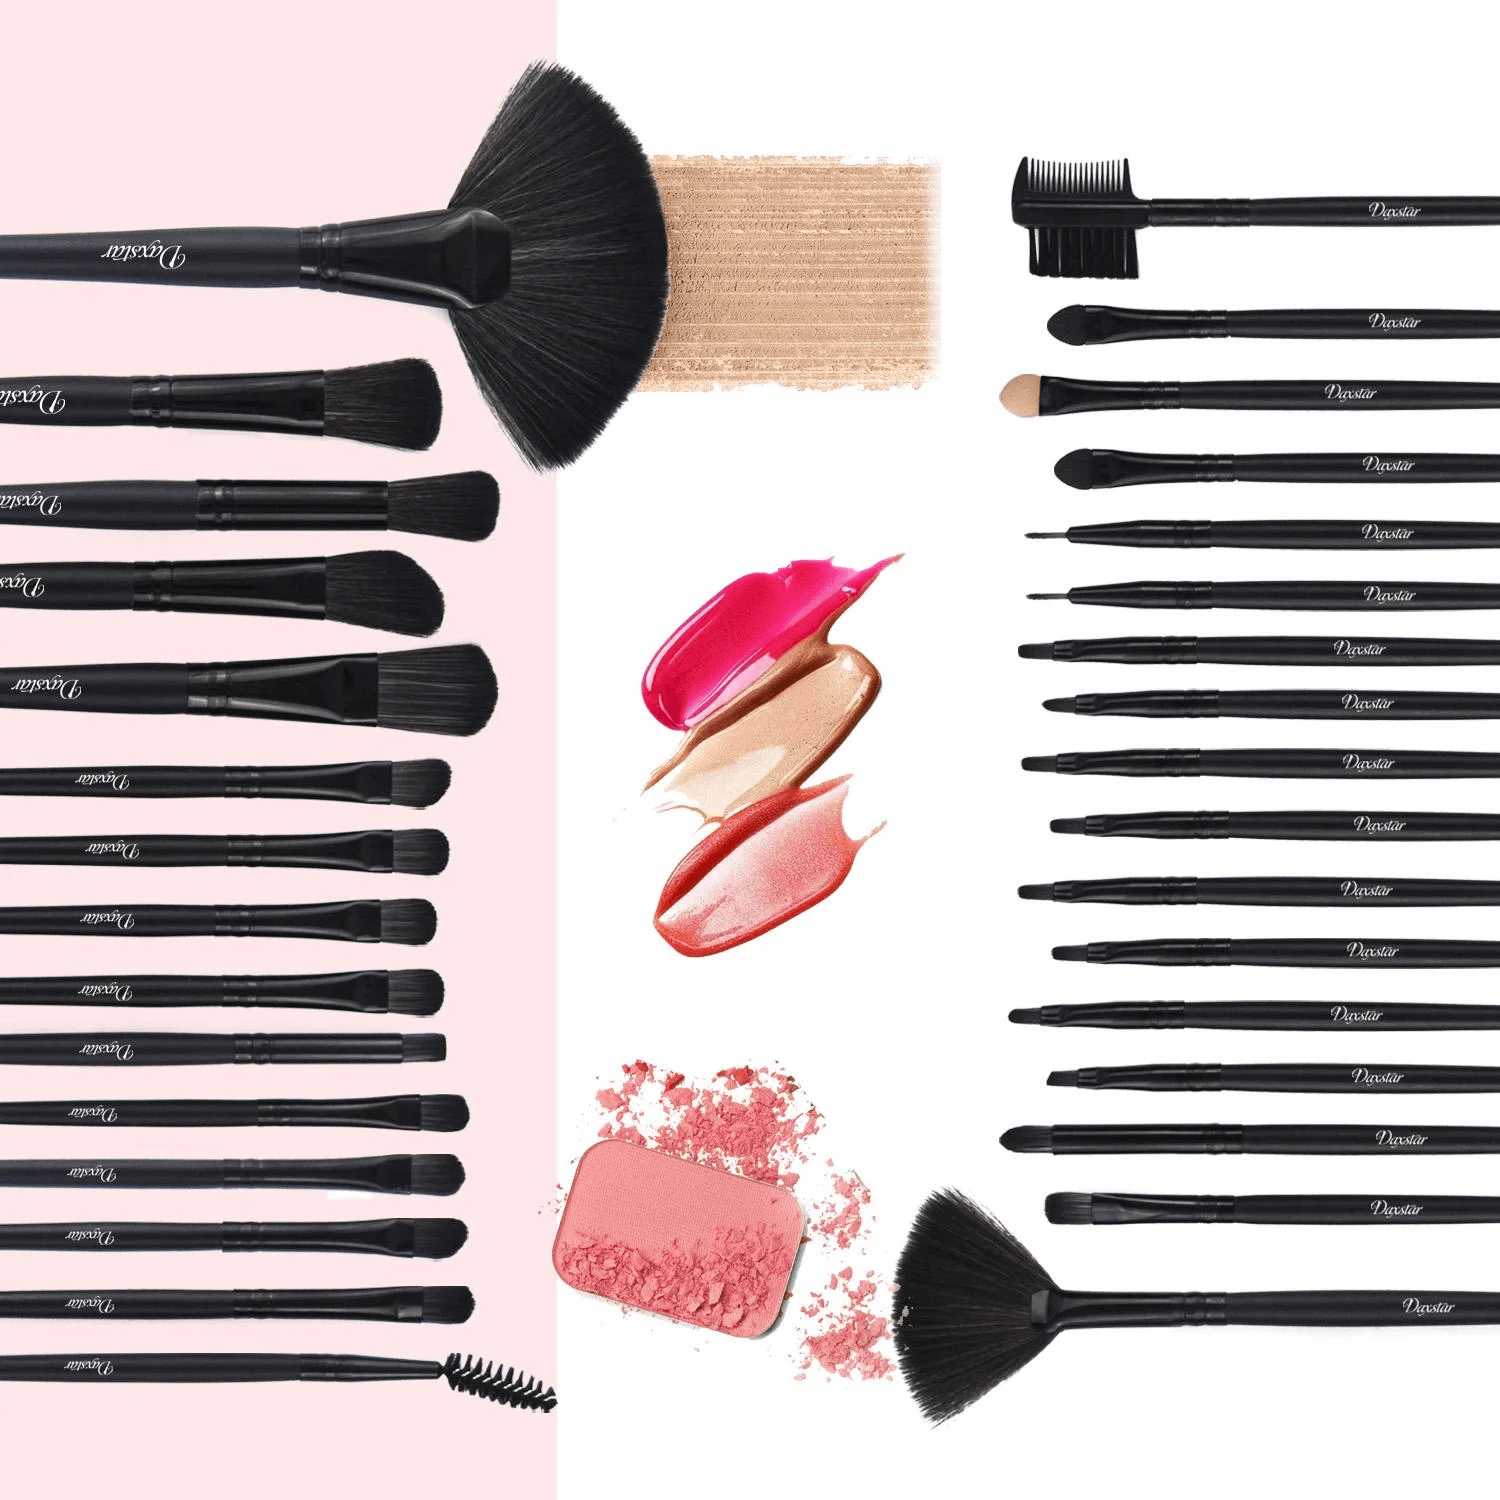 32 Sets Makeup Brushes - BelleHarris